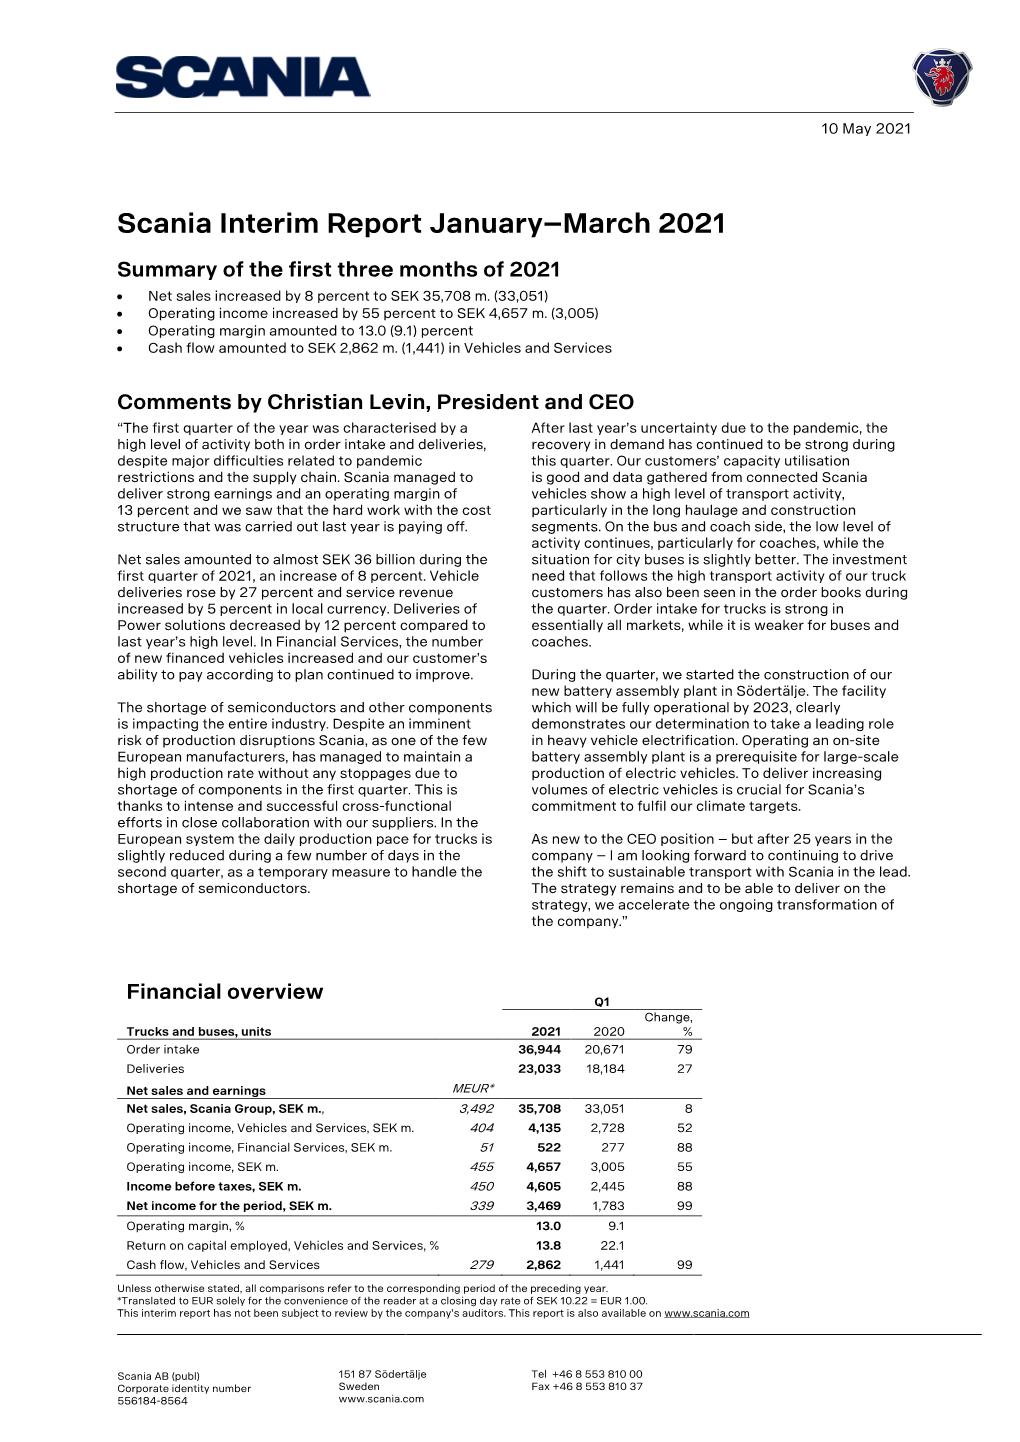 Scania Interim Report January-March 2021